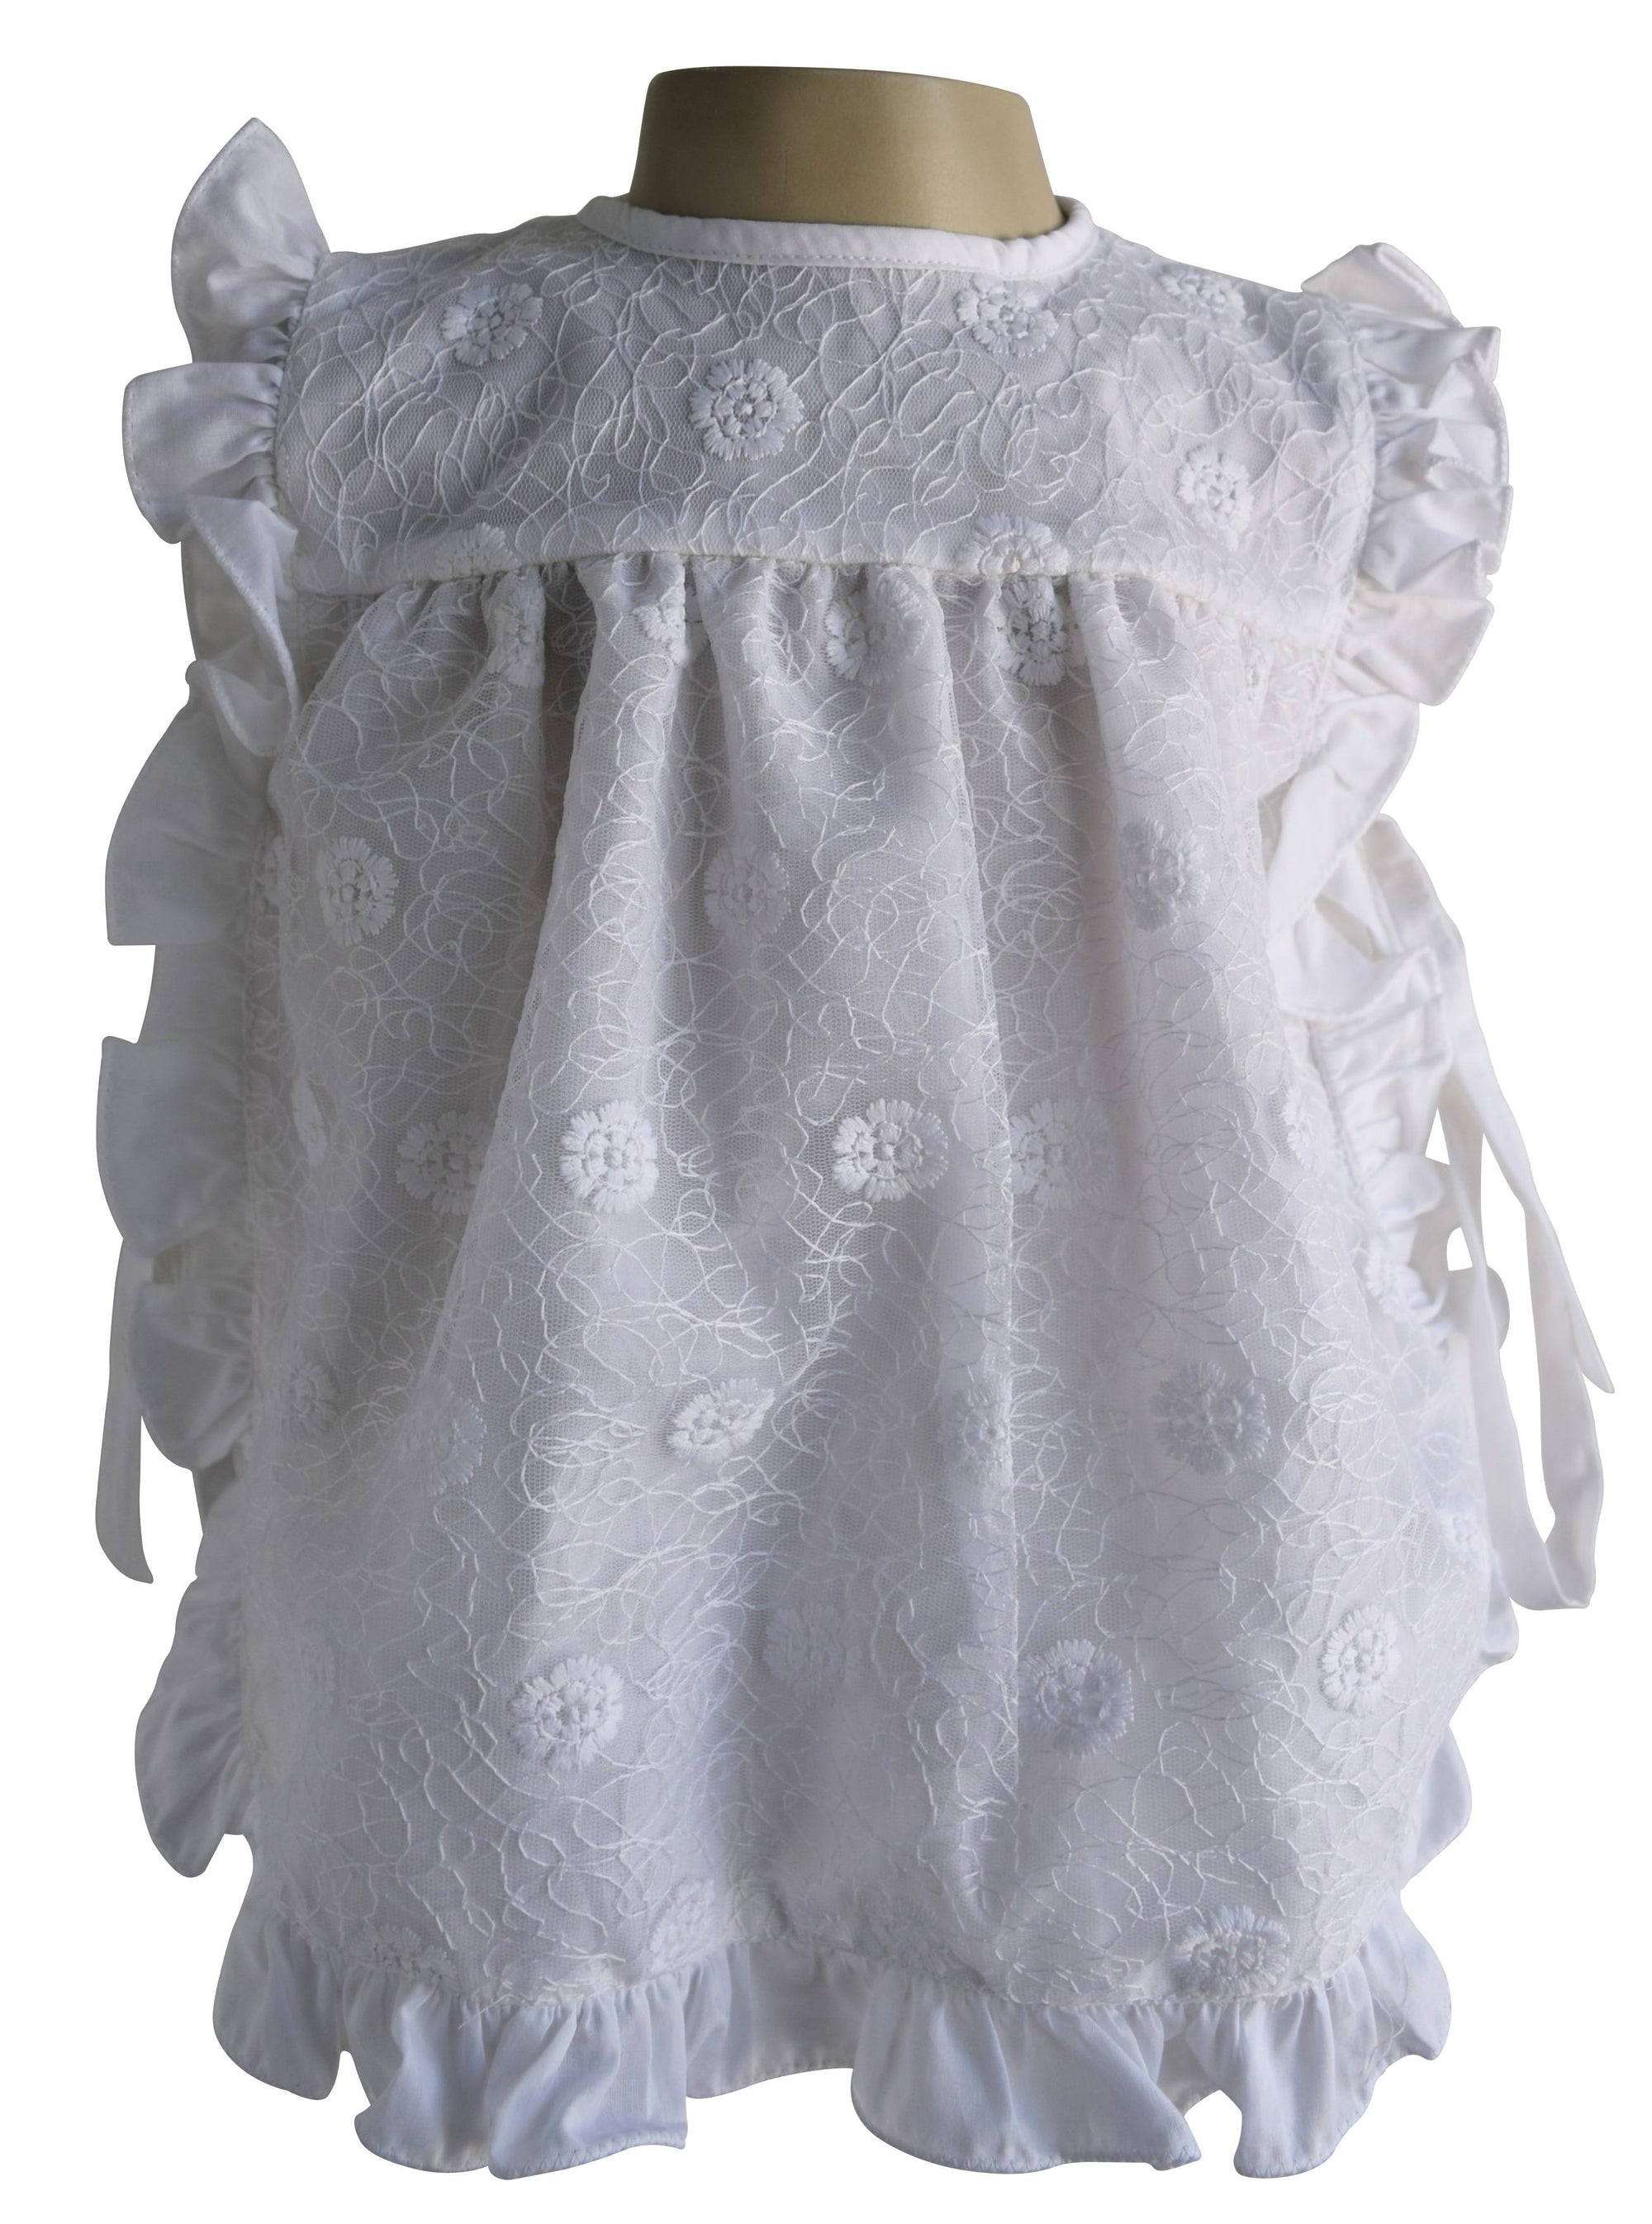 15+ Free Baby Dress Patterns Anyone Can Make ⋆ Hello Sewing